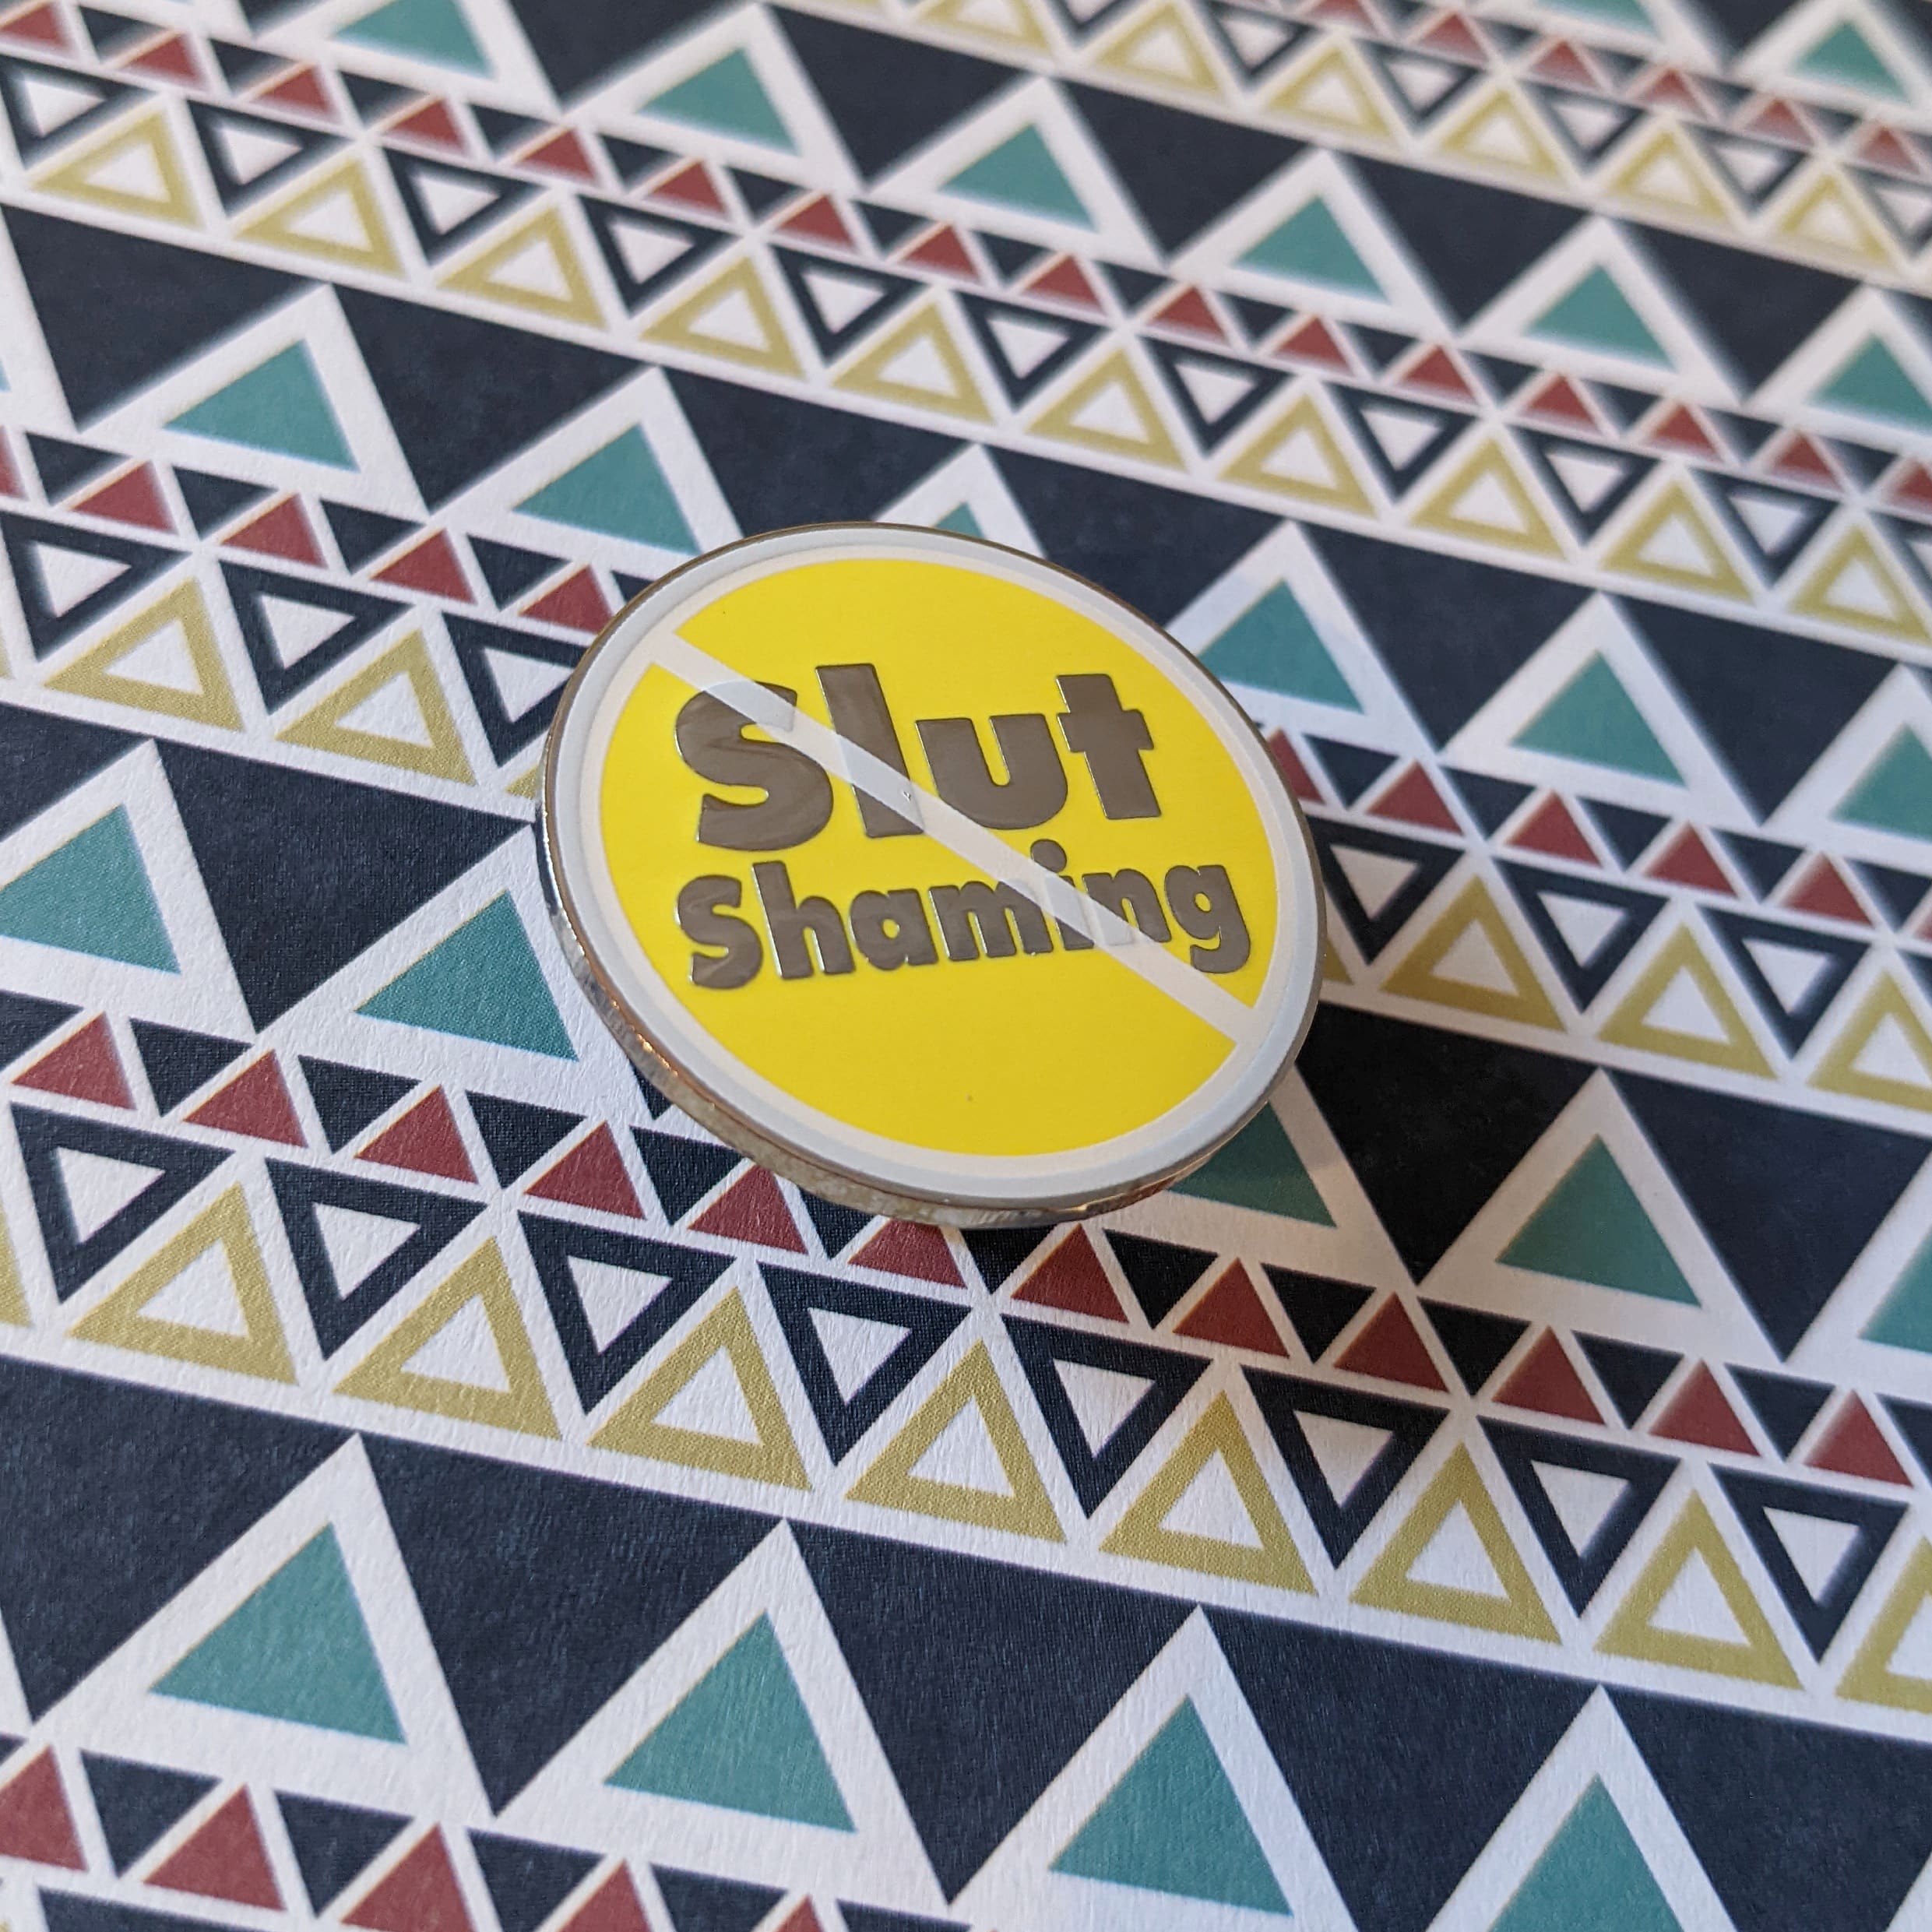 No Slut Shaming hard enamel pin (yellow/silver version)